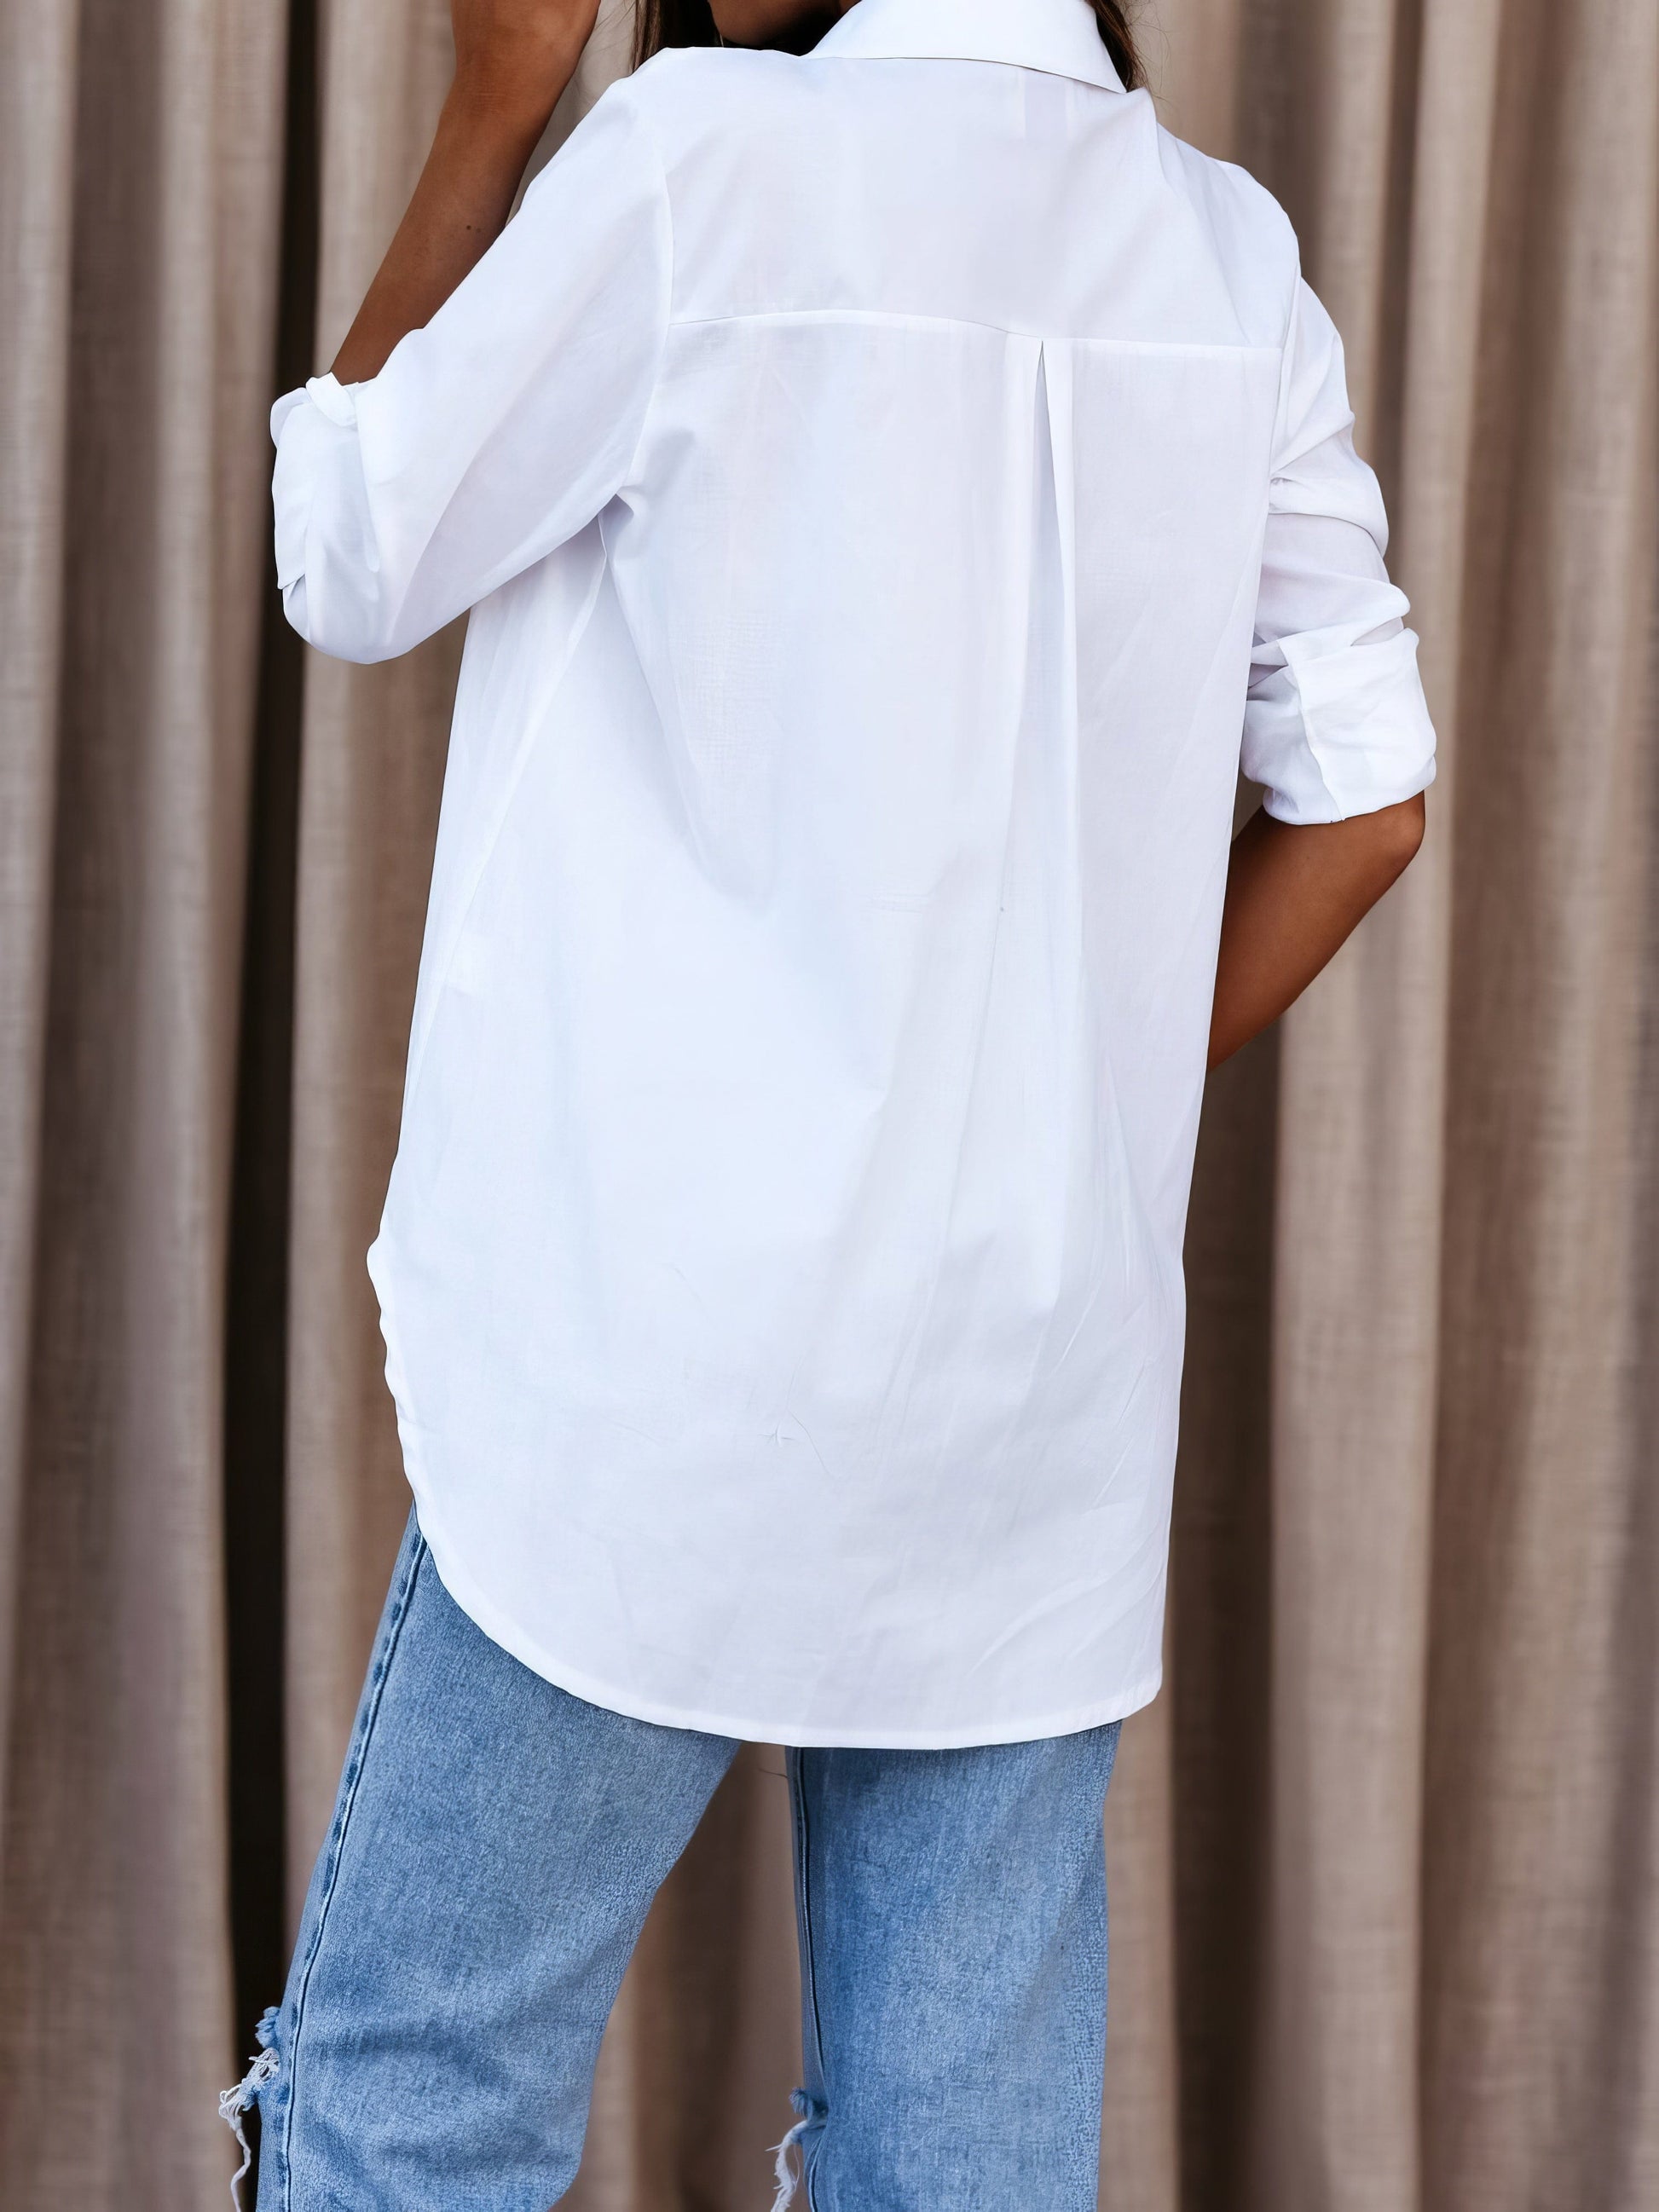 MsDressly Blouses Simple Long Sleeve V-Neck Button Blouses